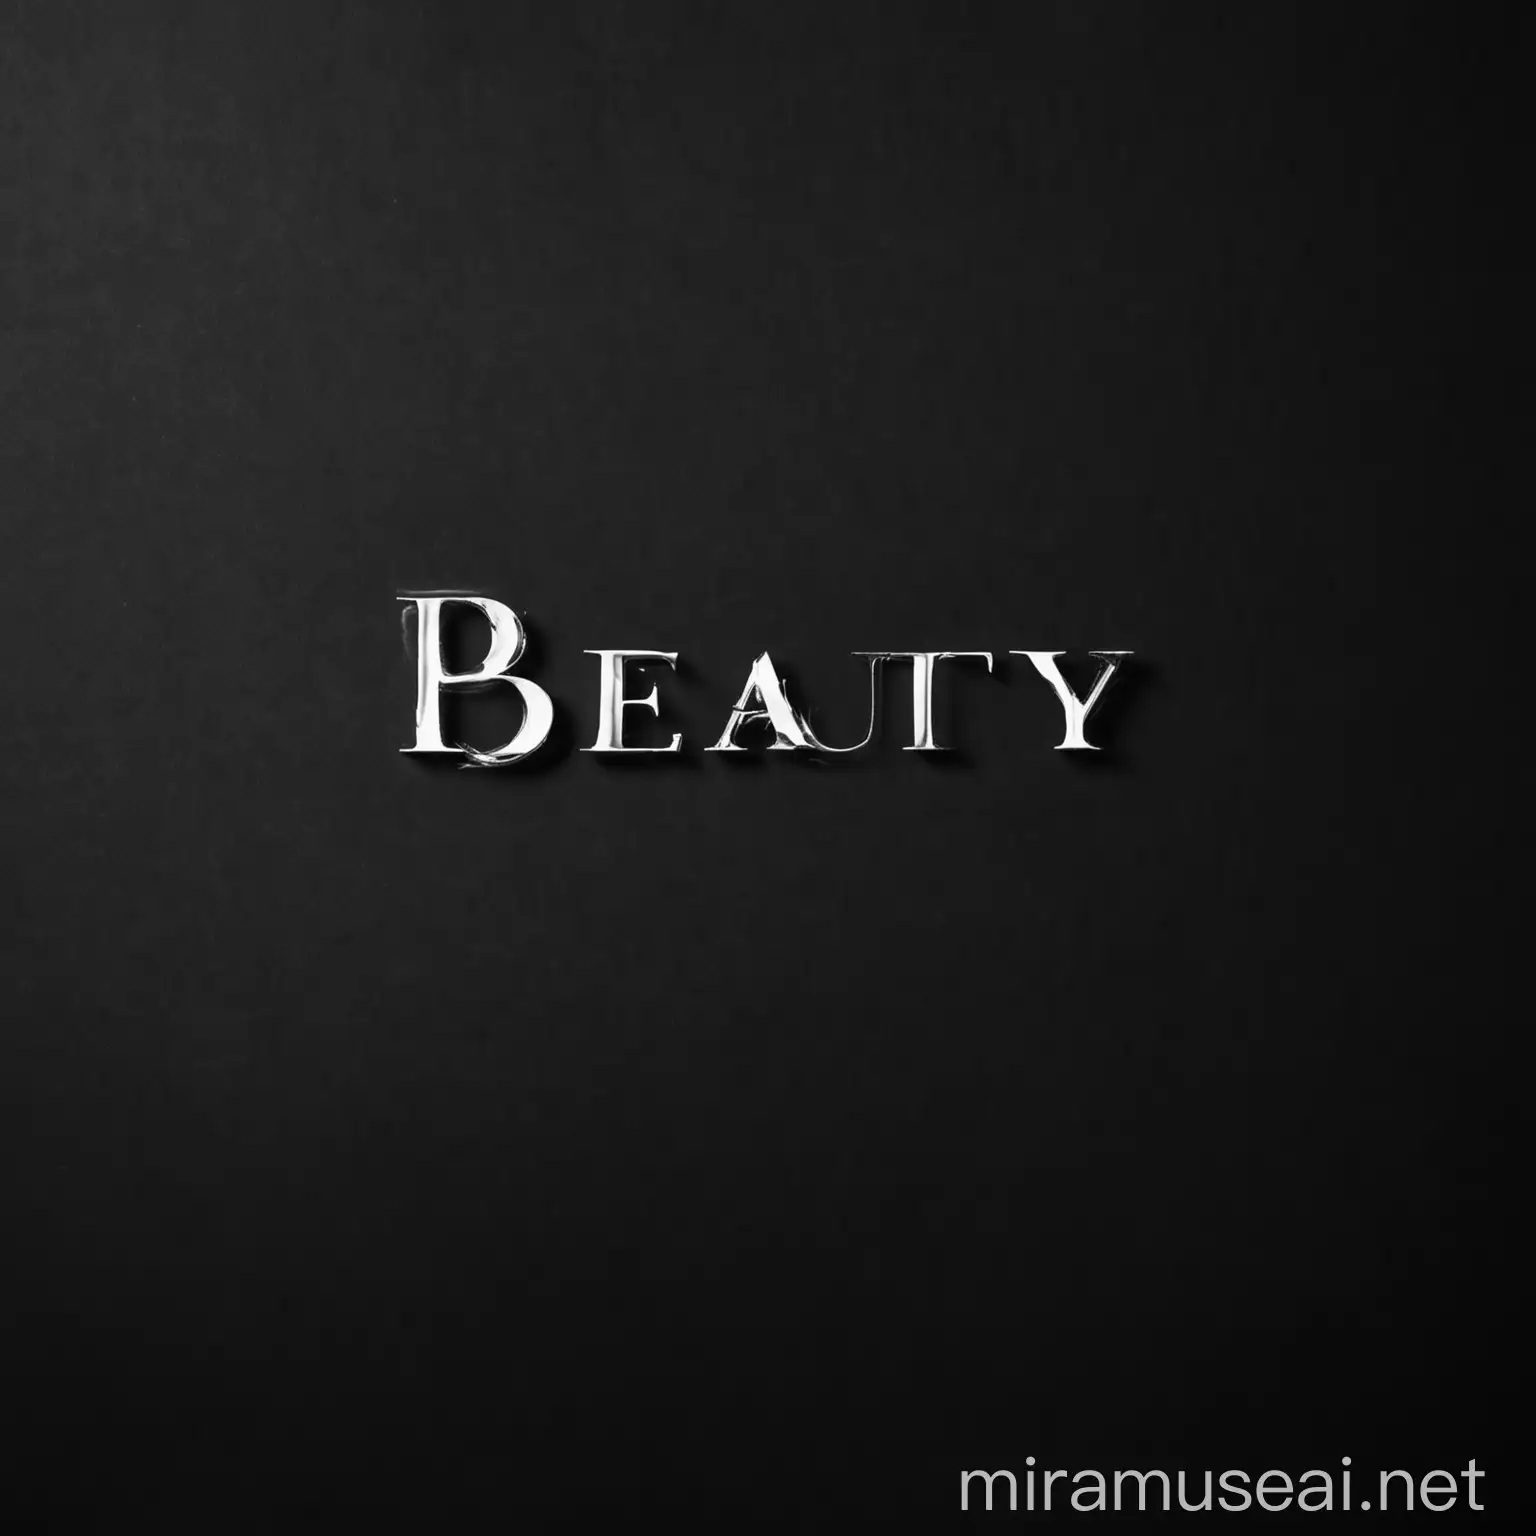 Elegant Beauty Text on Black Background